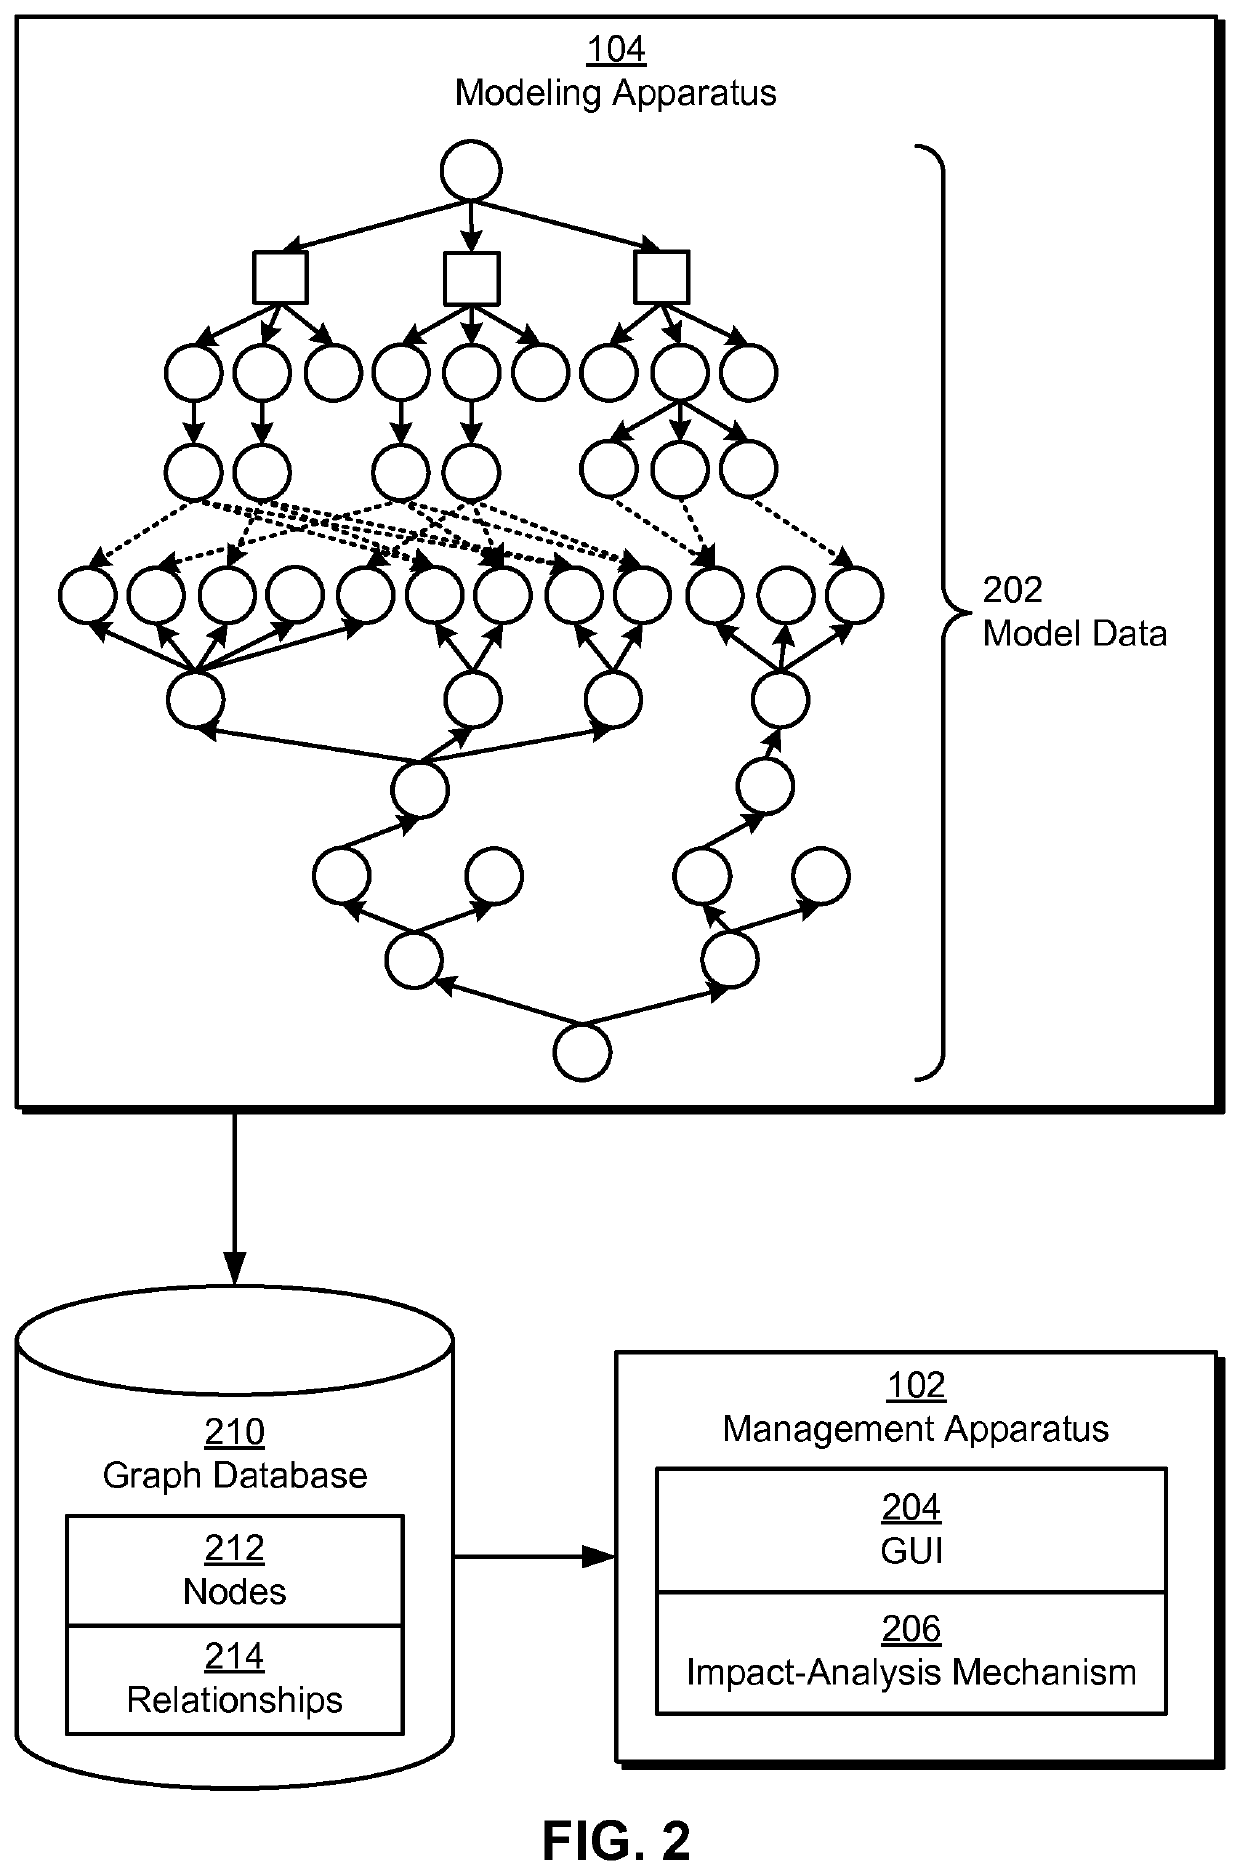 Graph databases for storing multidimensional models of software offerings